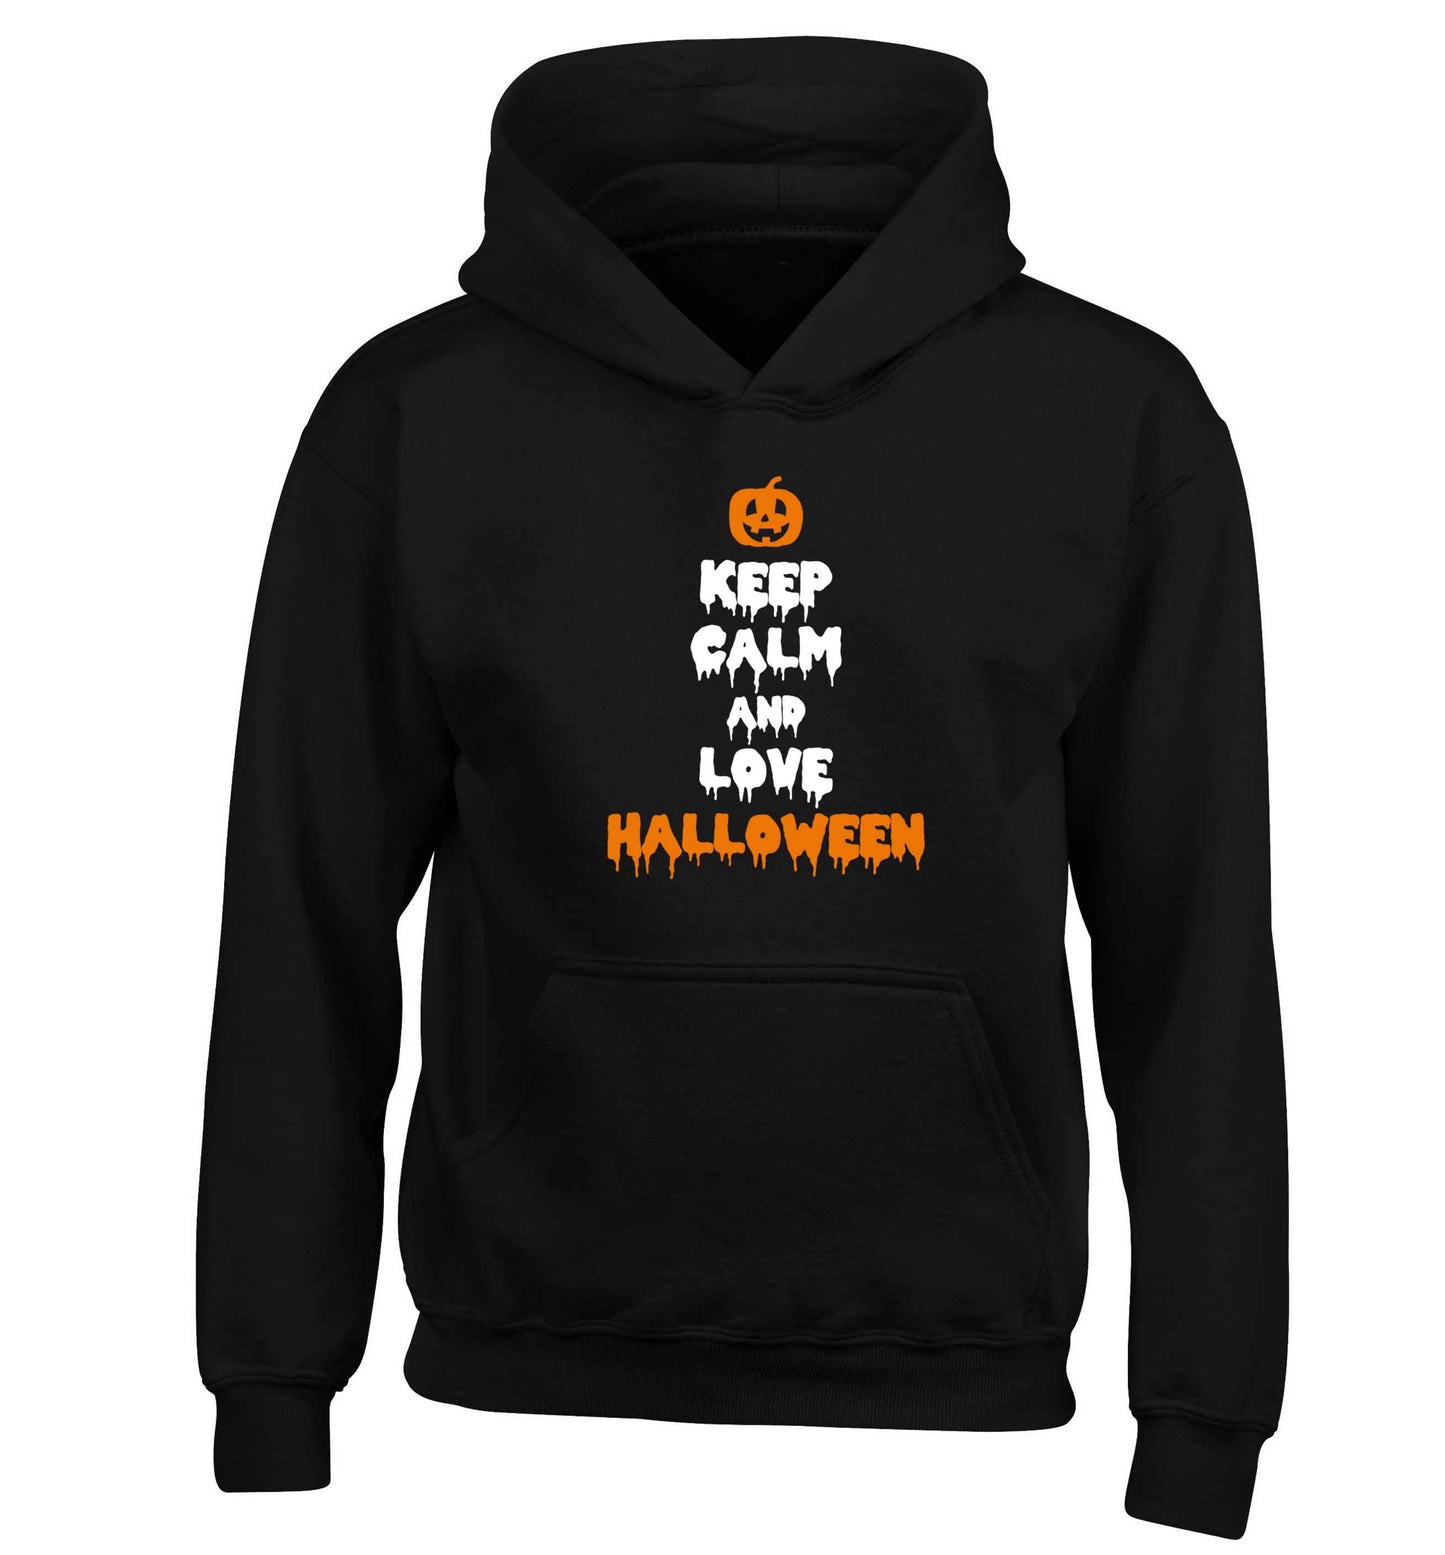 Keep calm and love halloween children's black hoodie 12-13 Years